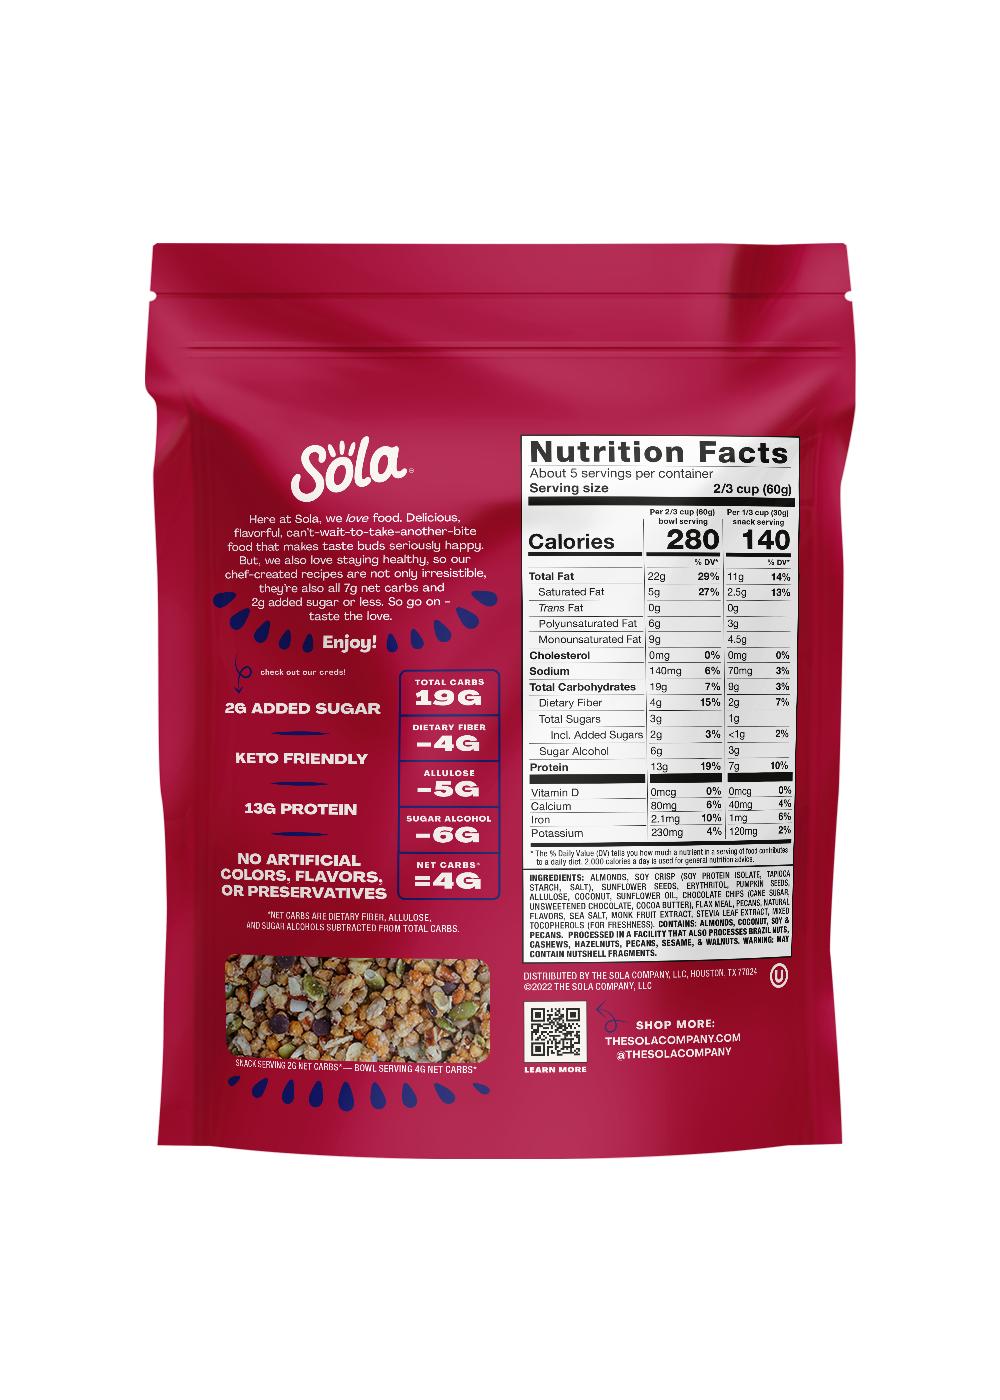 Sola 13g Protein Granola - Maple Pecan Chocolate; image 2 of 3